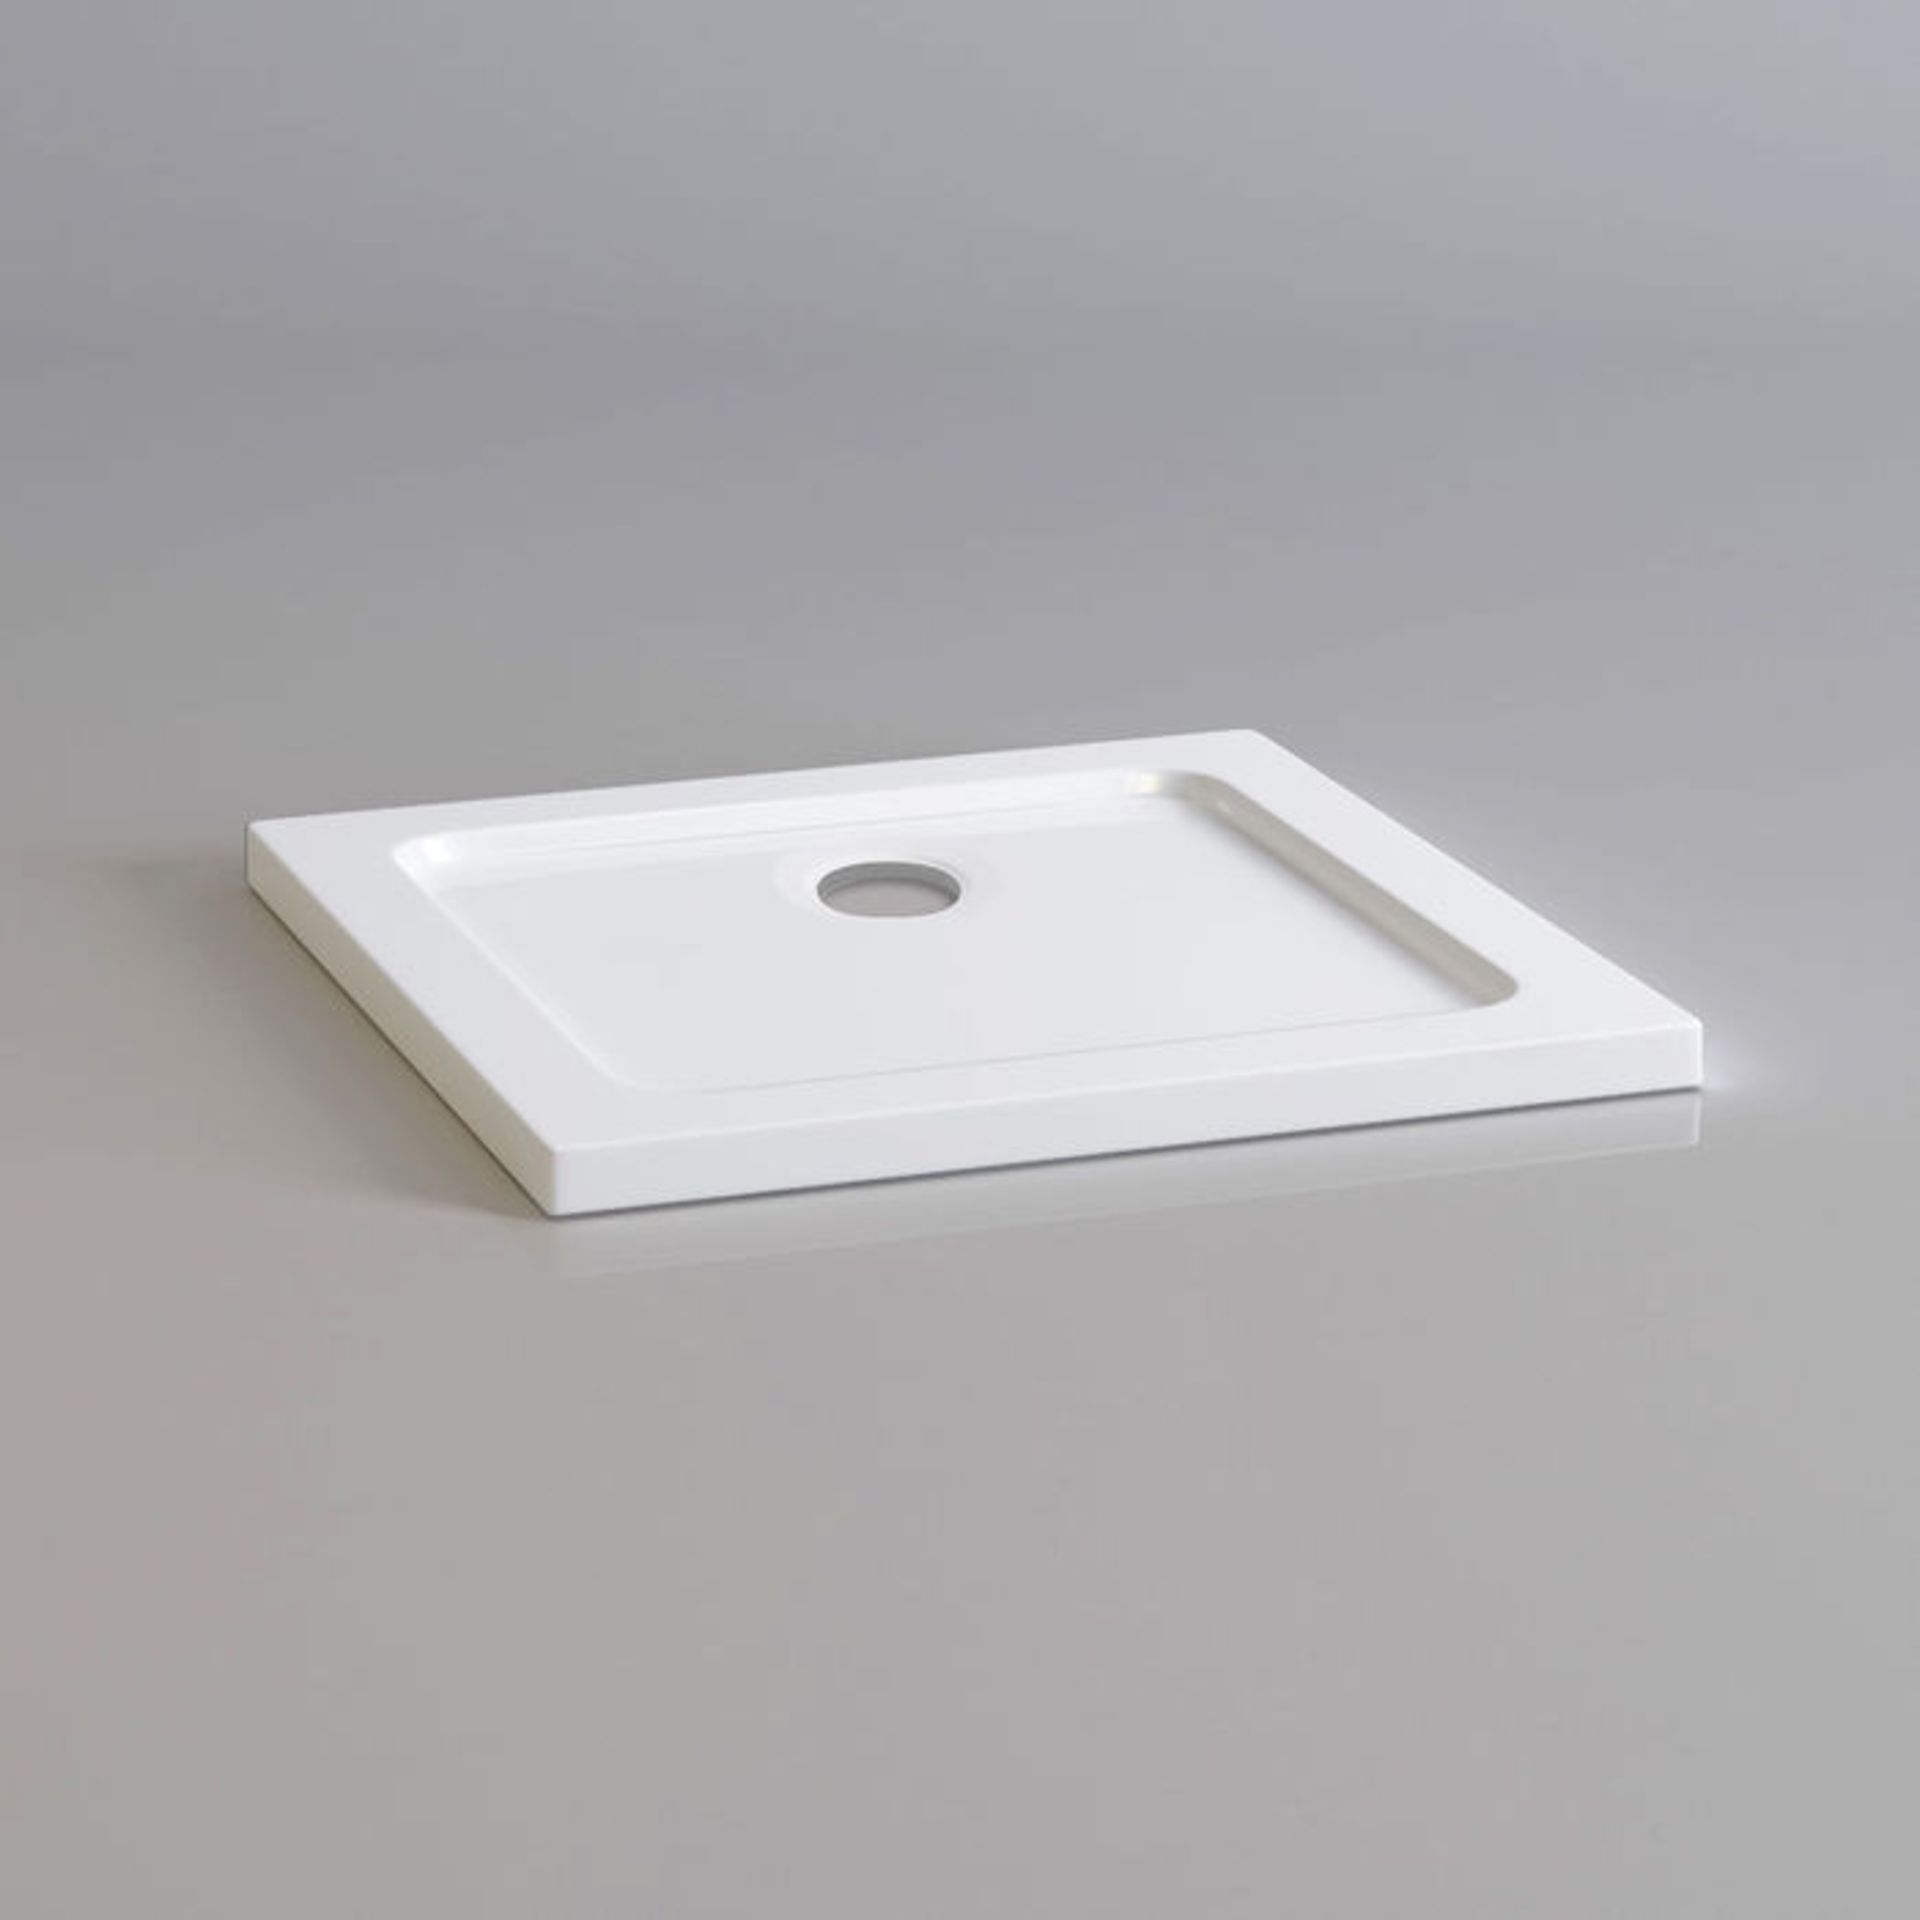 (ZA89) 800x800mm Square Ultra Slim Stone Shower Tray. Low profile ultra slim design Gel coated stone - Image 2 of 2